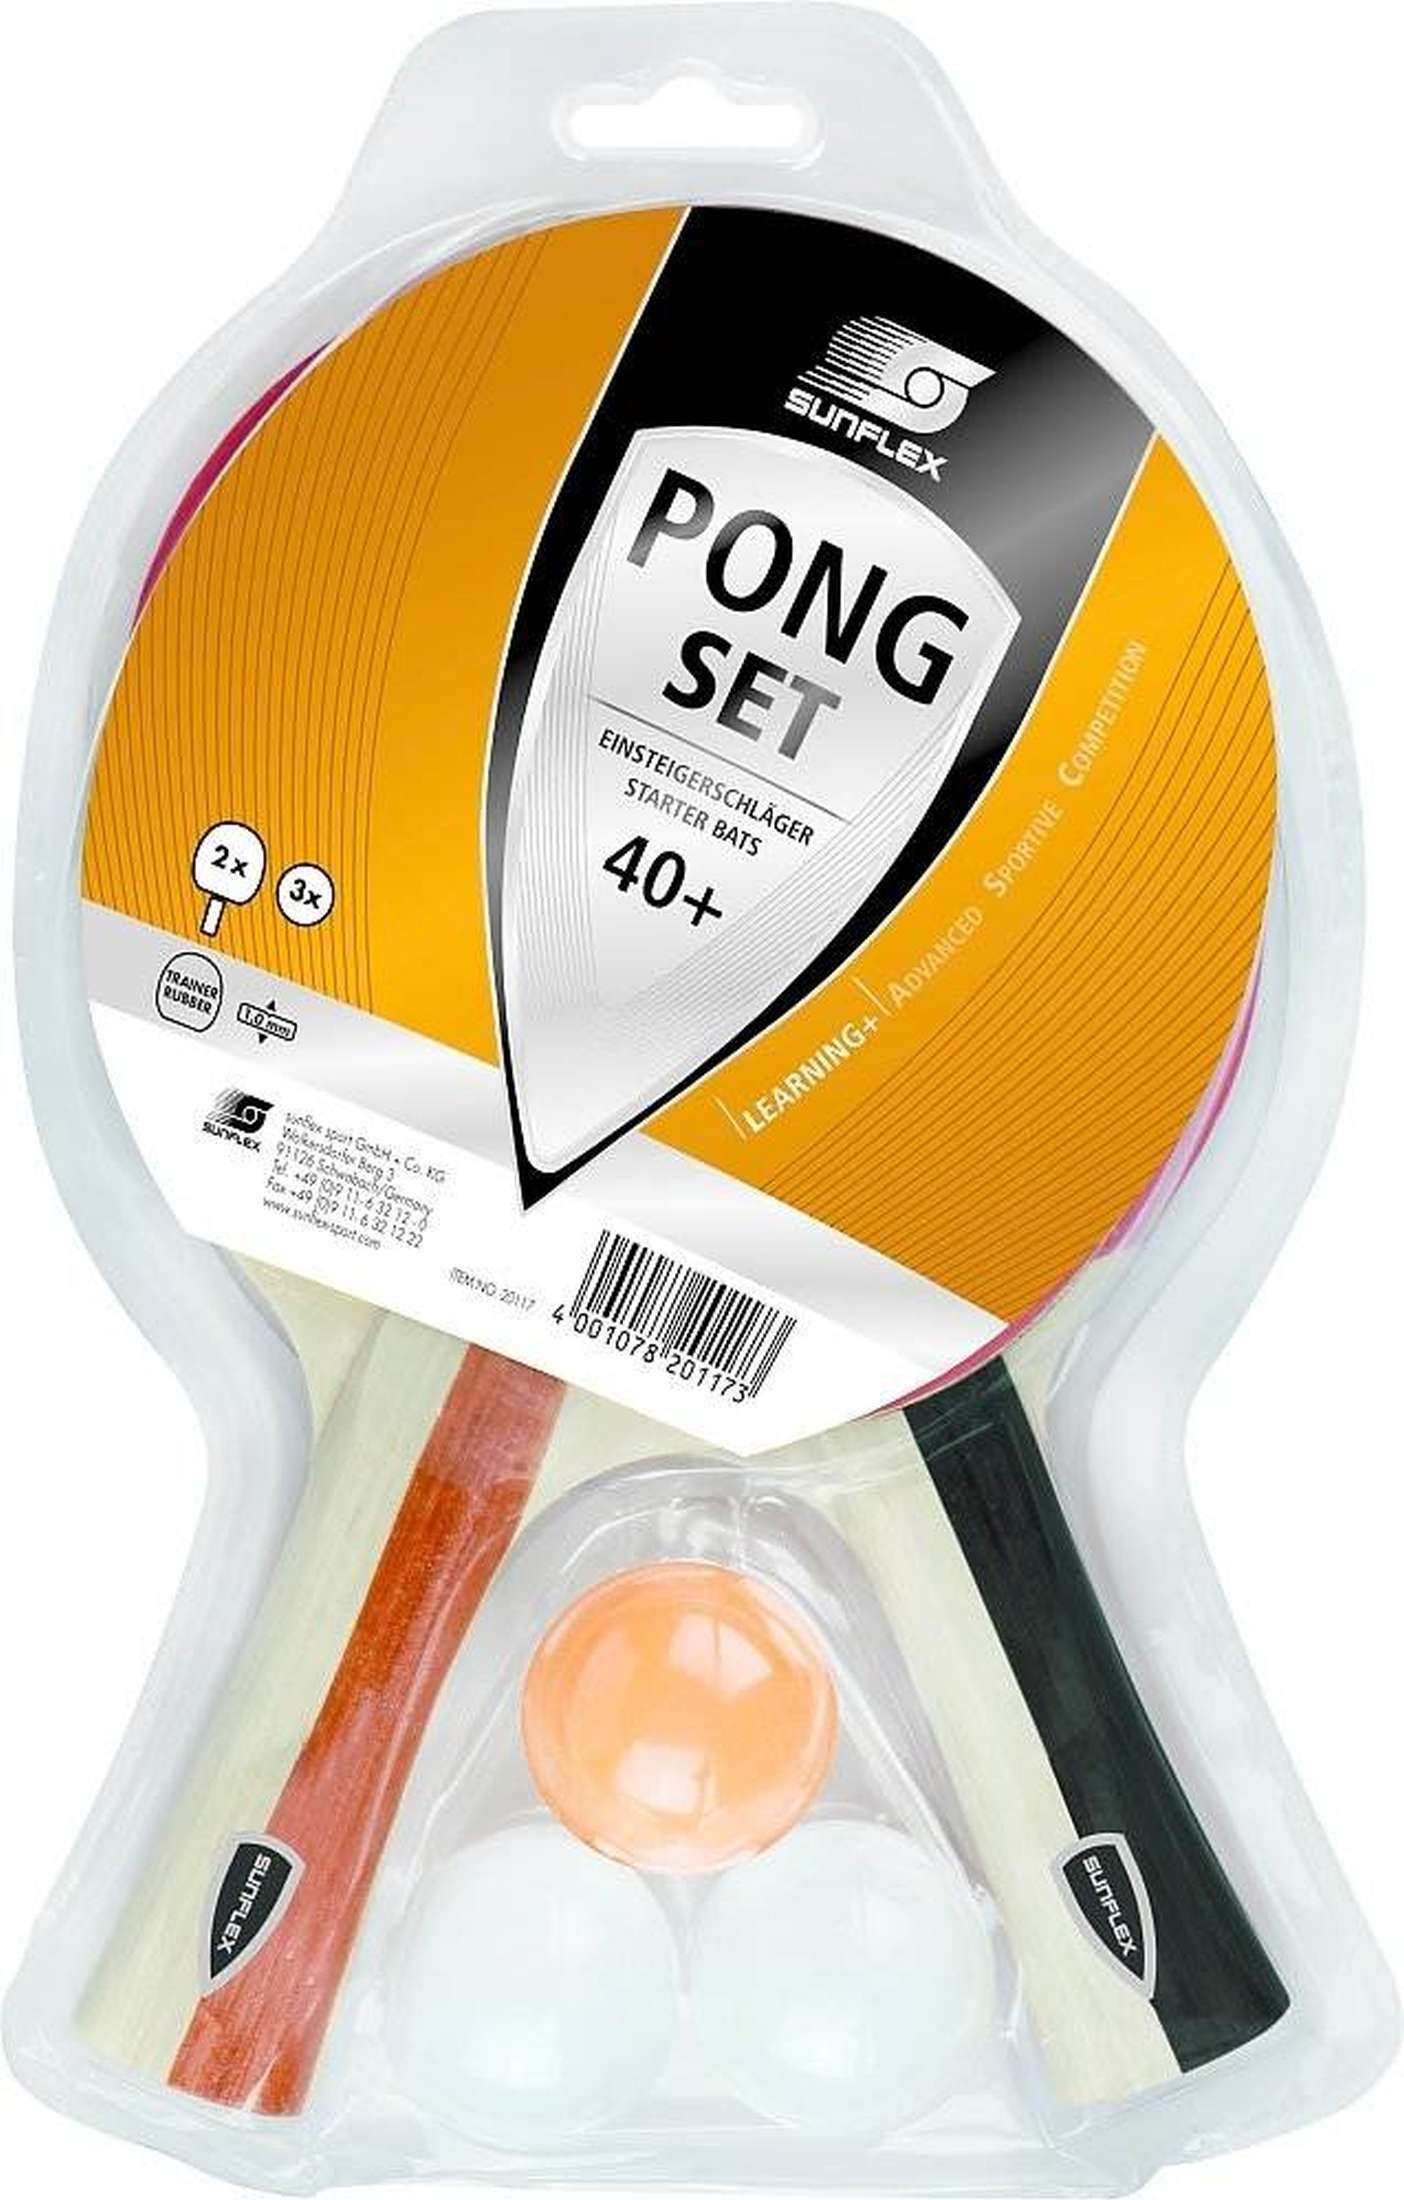 Sunflex Pong-1 Table Tennis Set